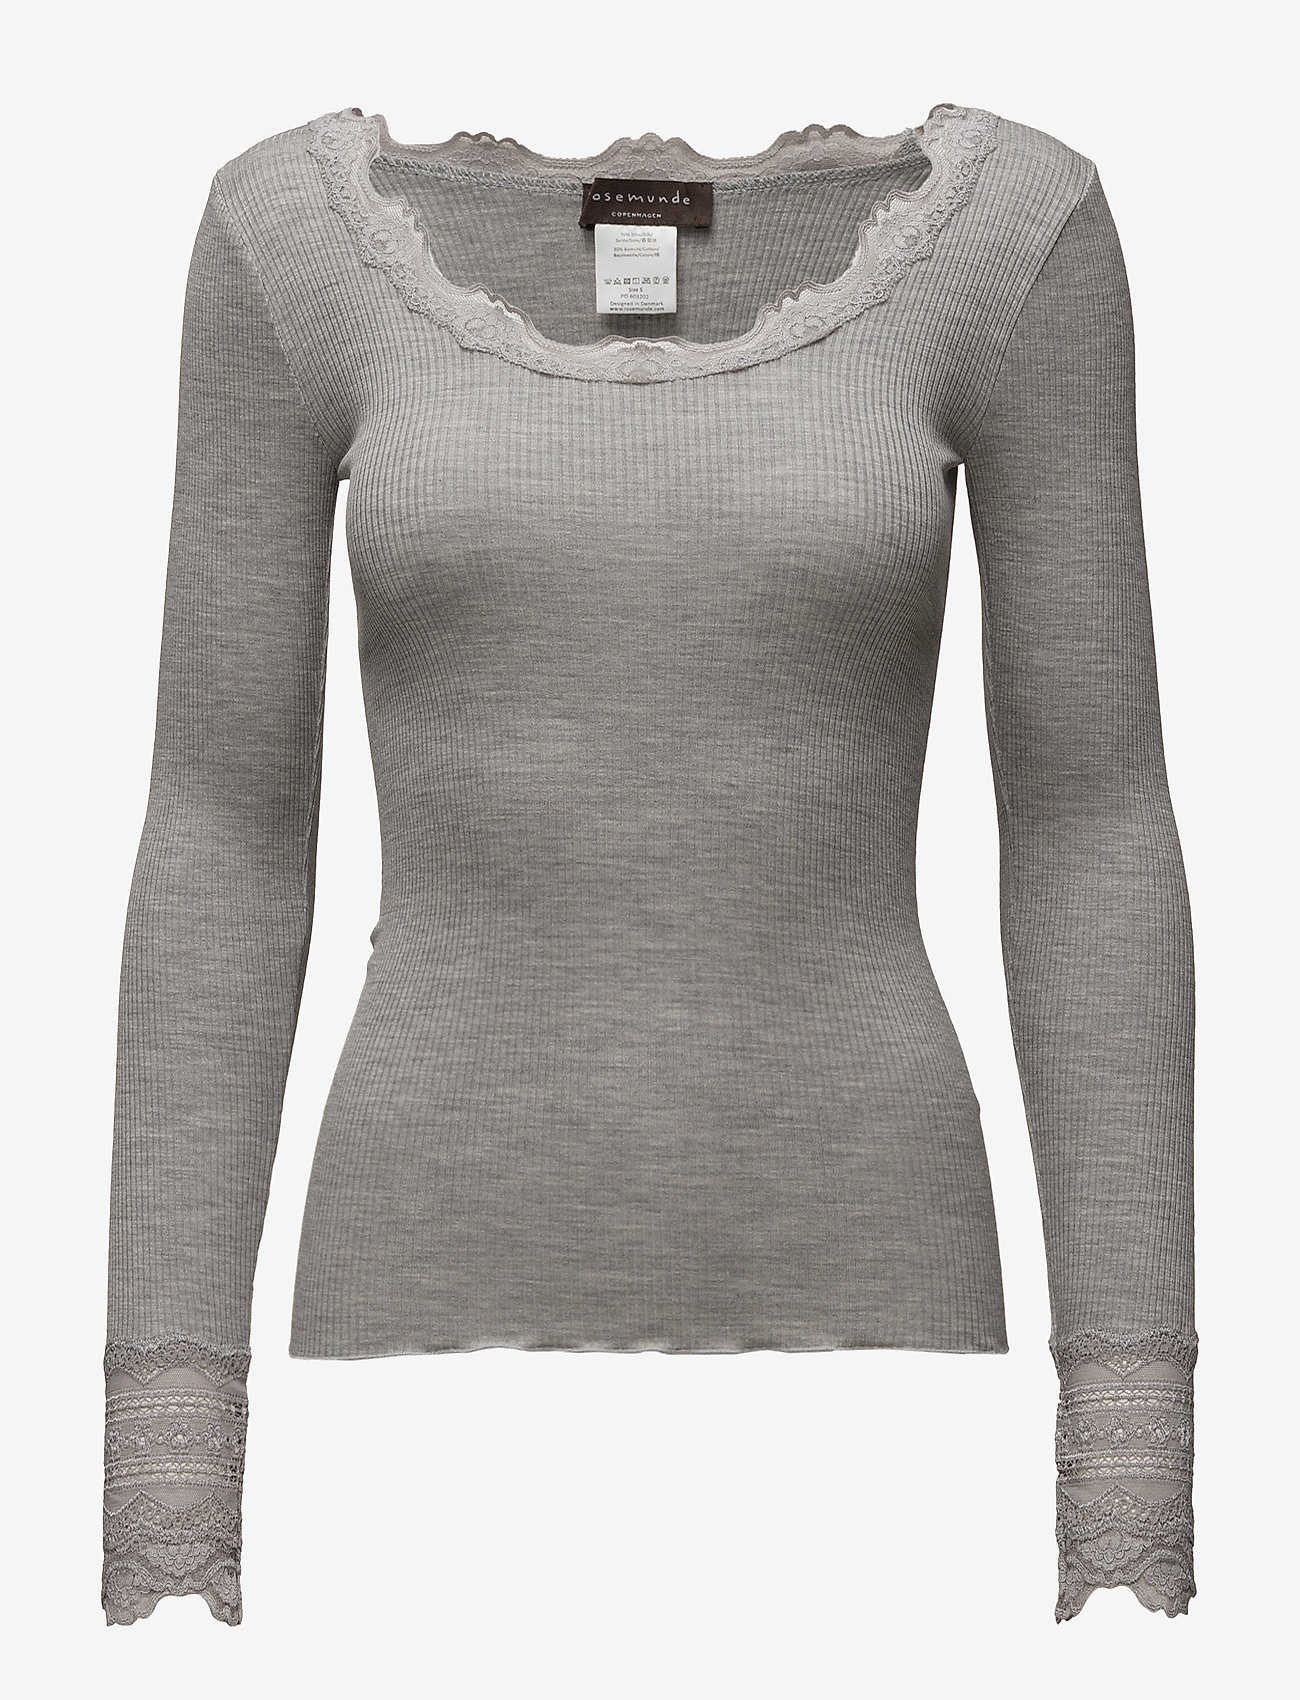 Rosemunde - Silk t-shirt w/ lace - long-sleeved tops - light grey melange - 1